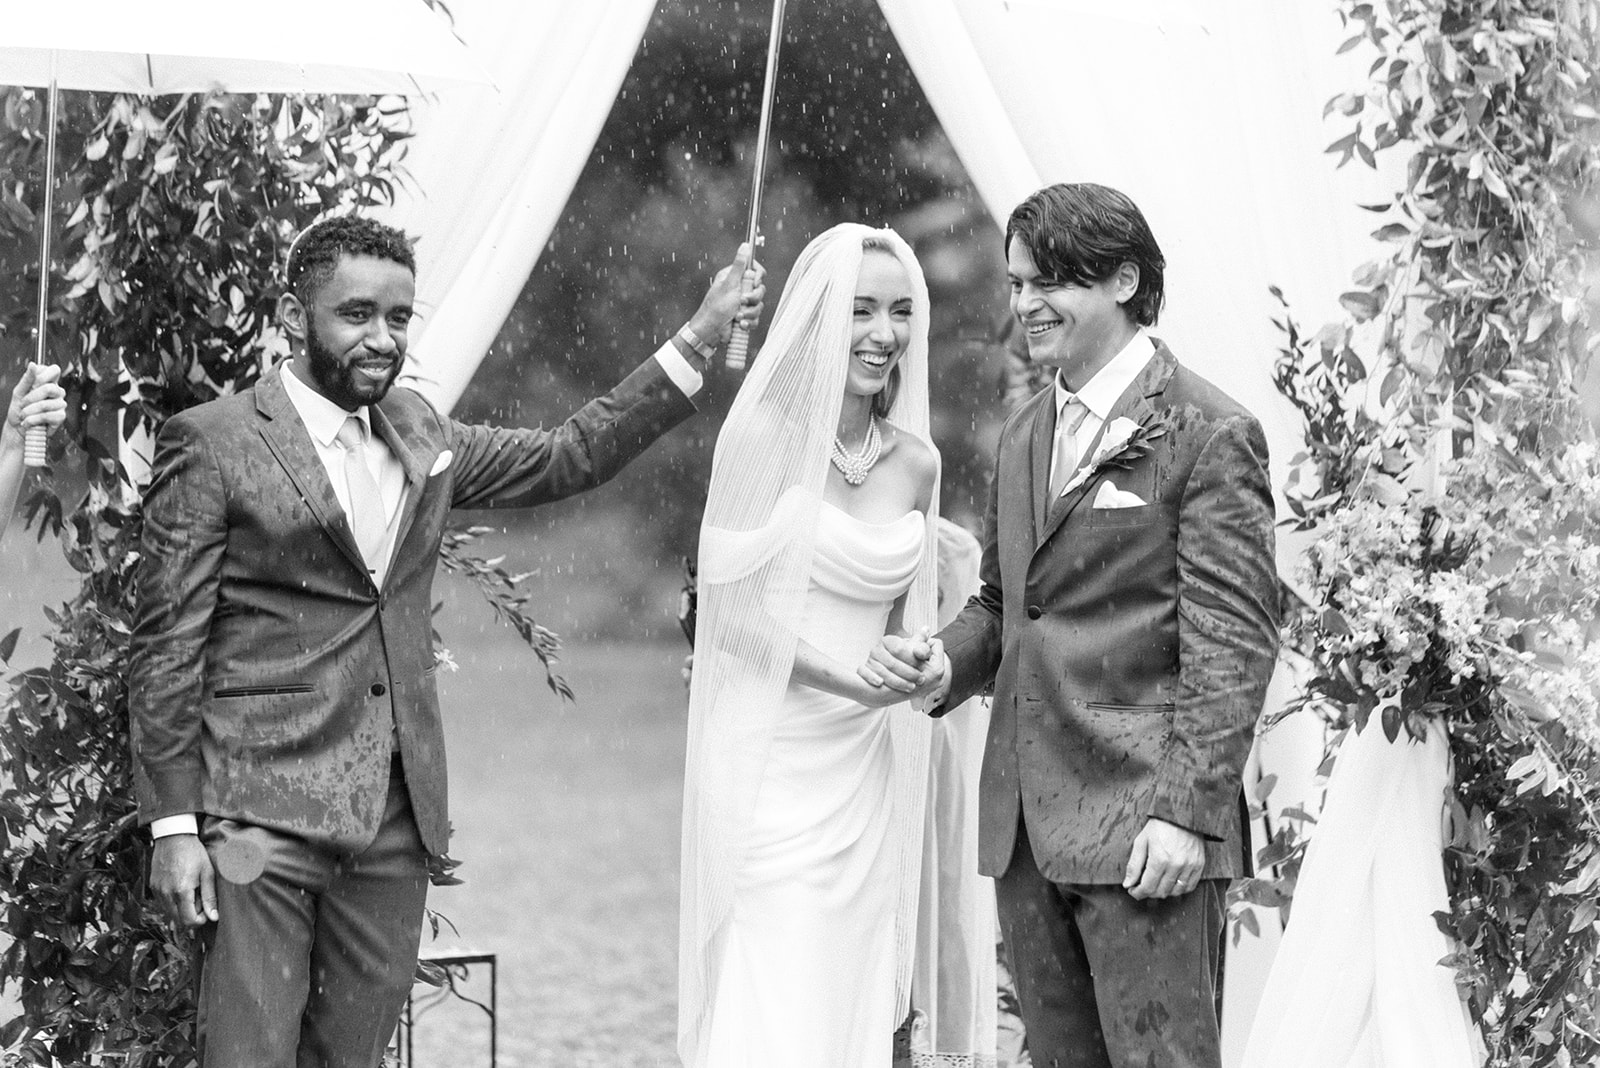 wedding at Cator Woolford Gardens in Atlanta